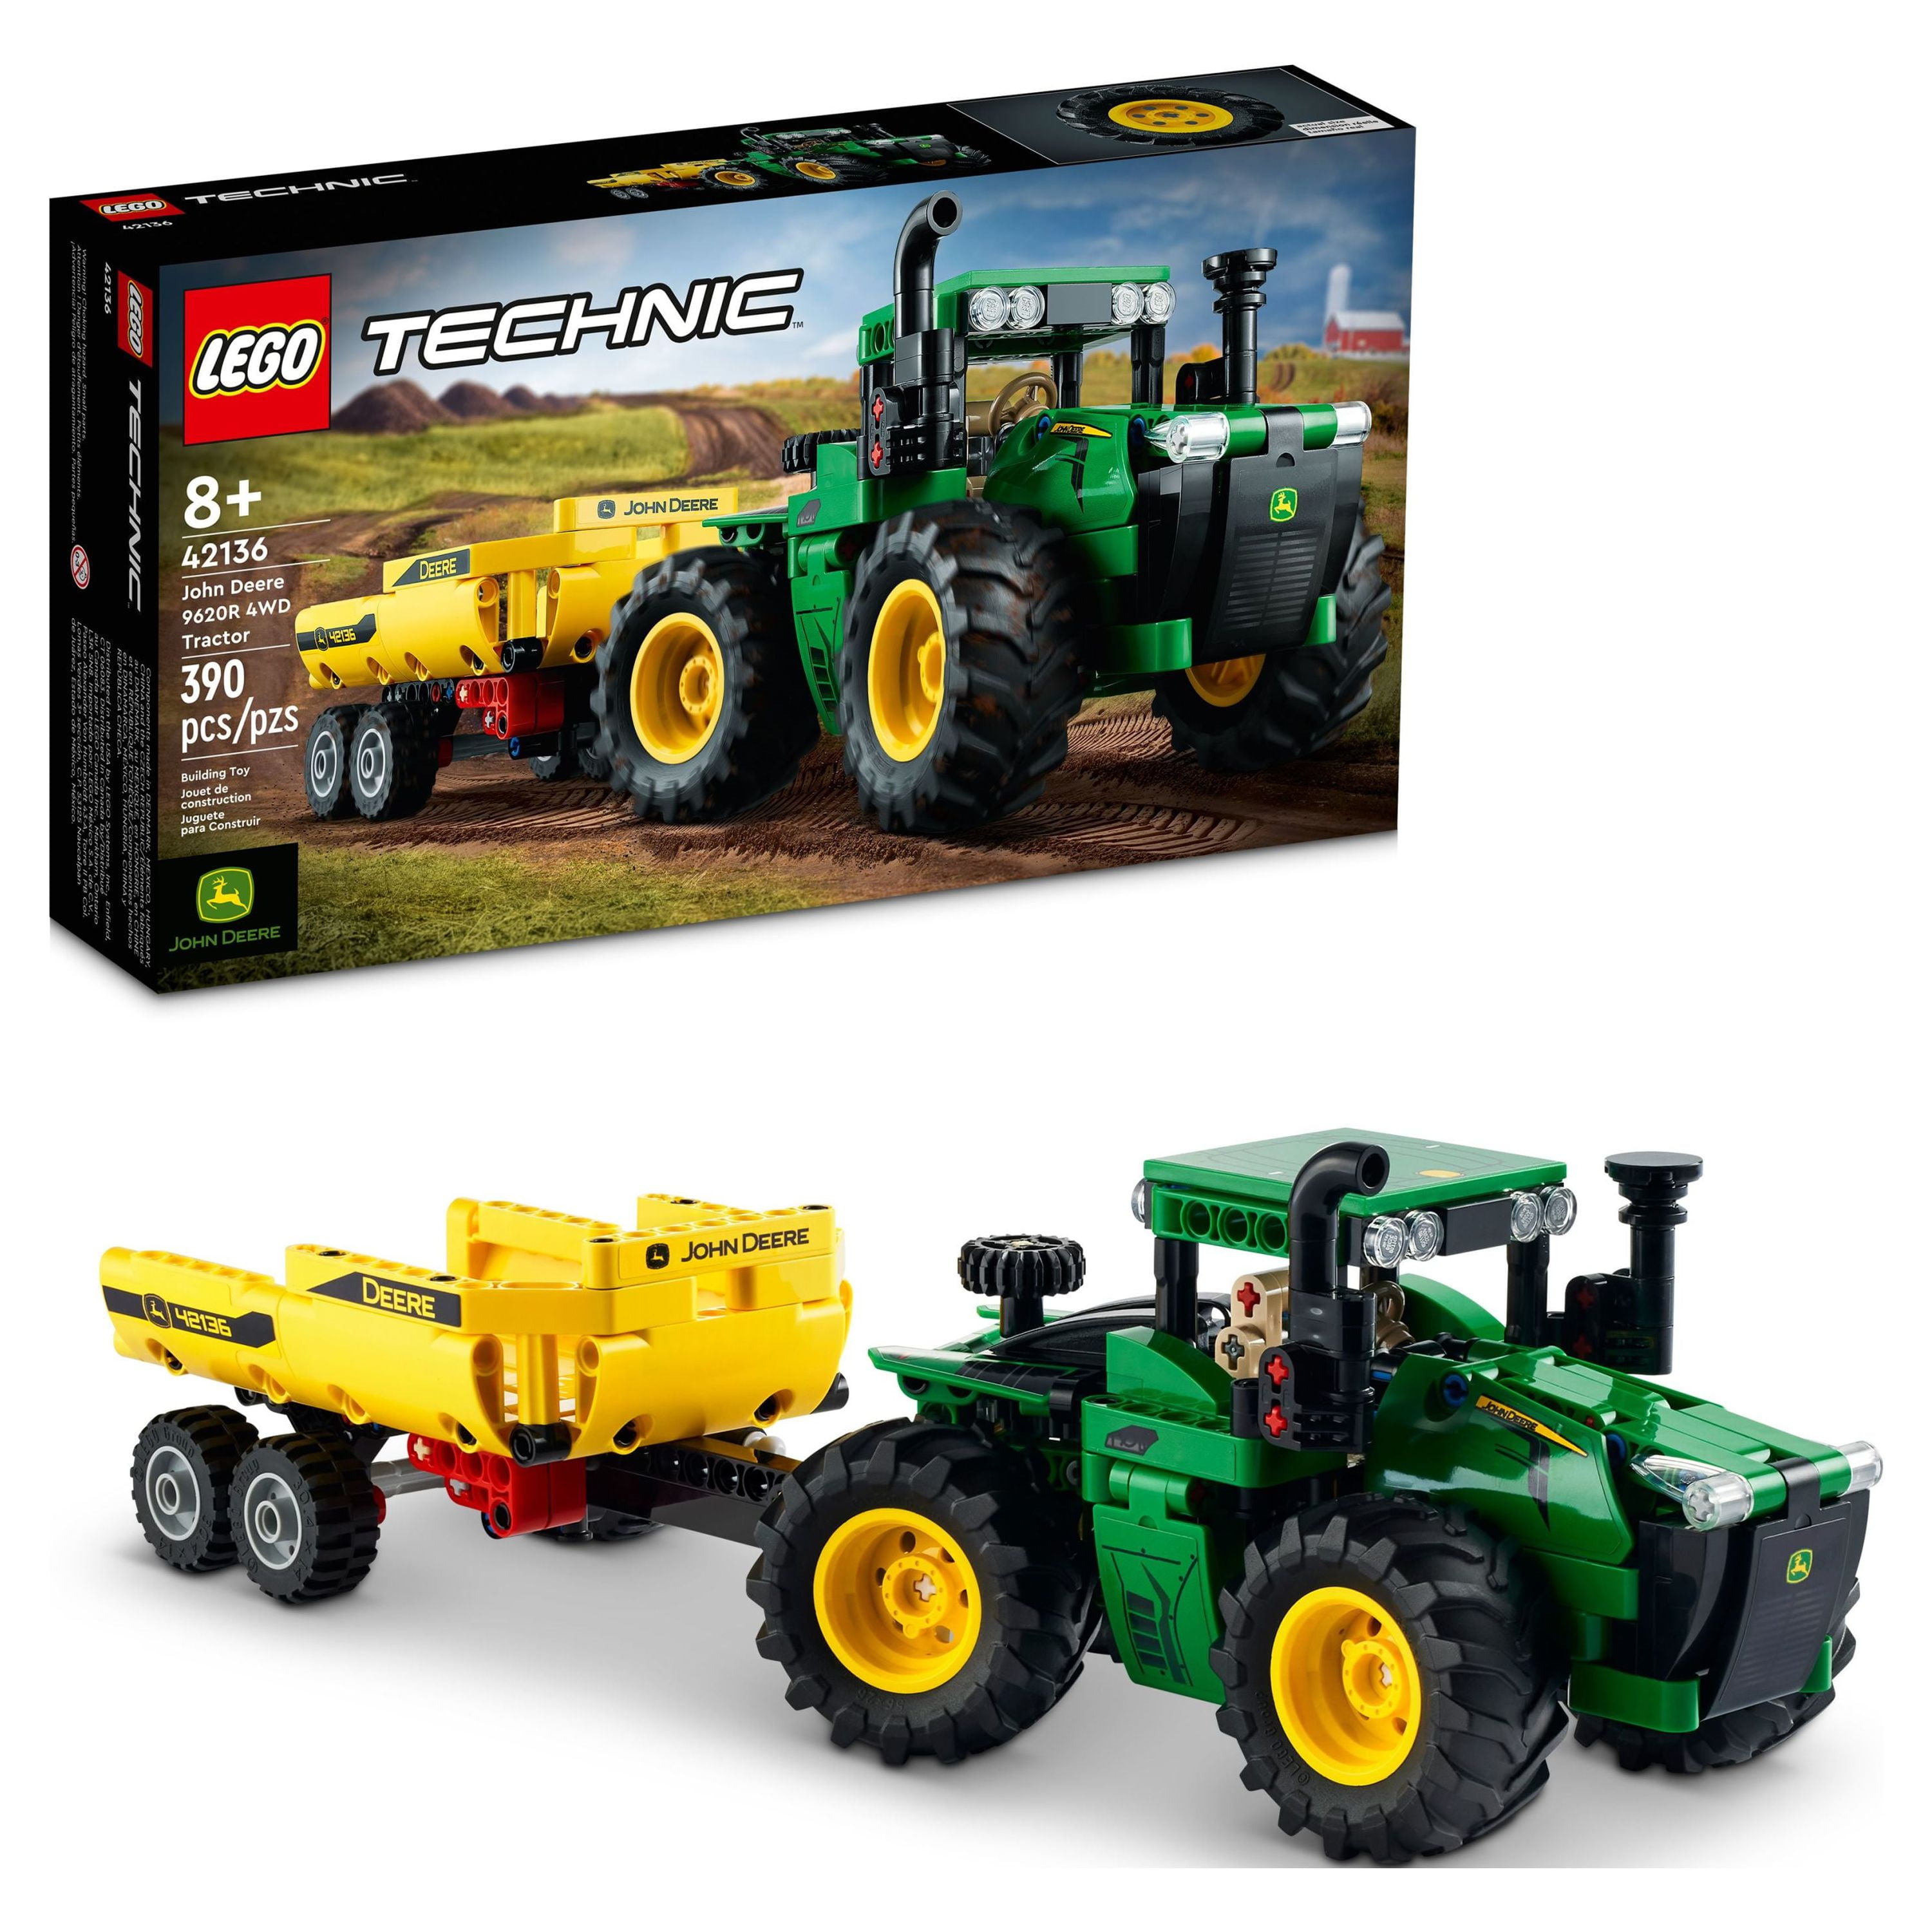 Lego 42136 Technic John Deere 9620r 4wd Tractor